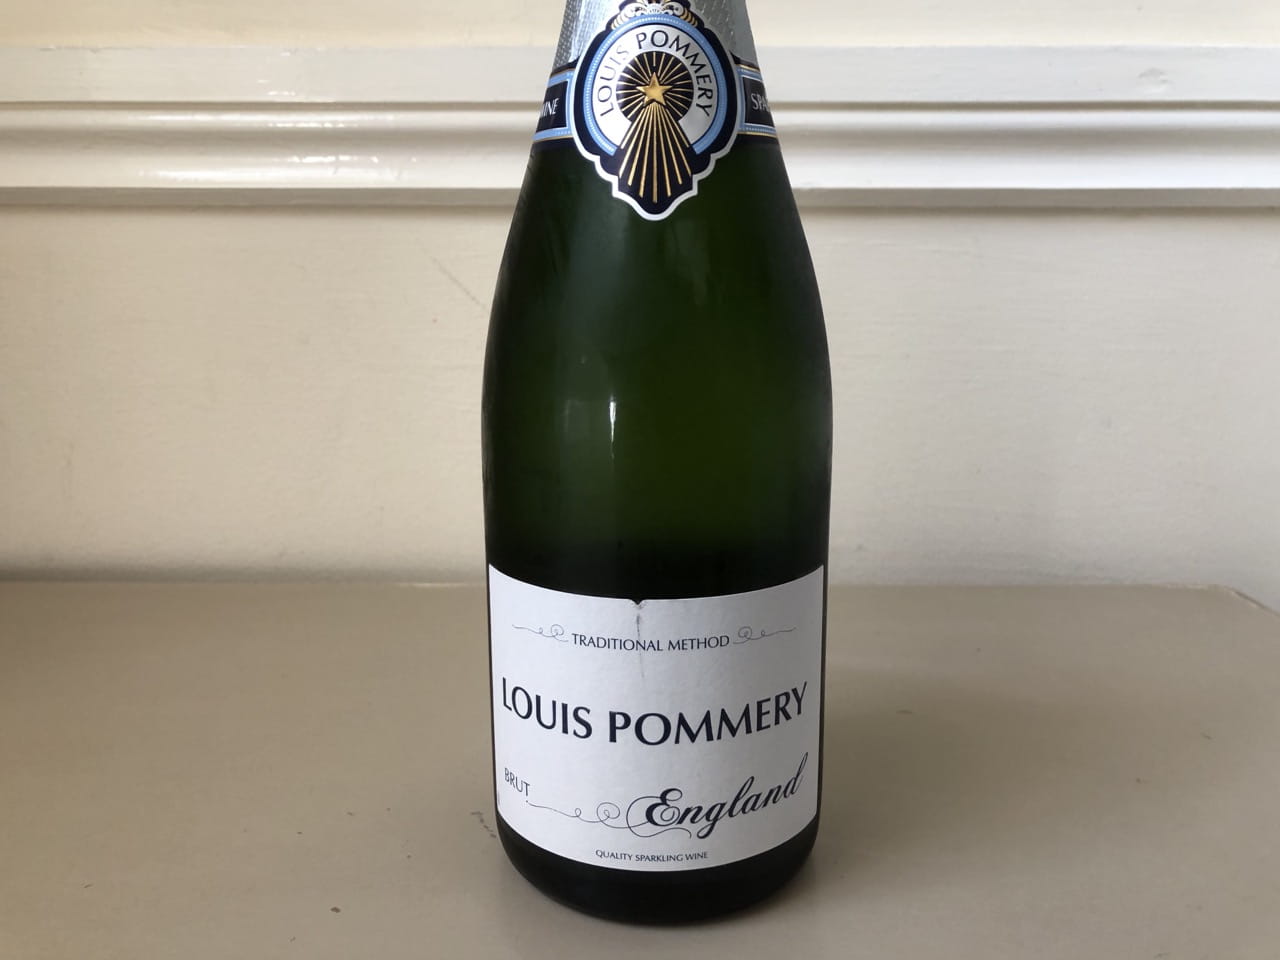 Wine of the week: Louis Pommery England Brut